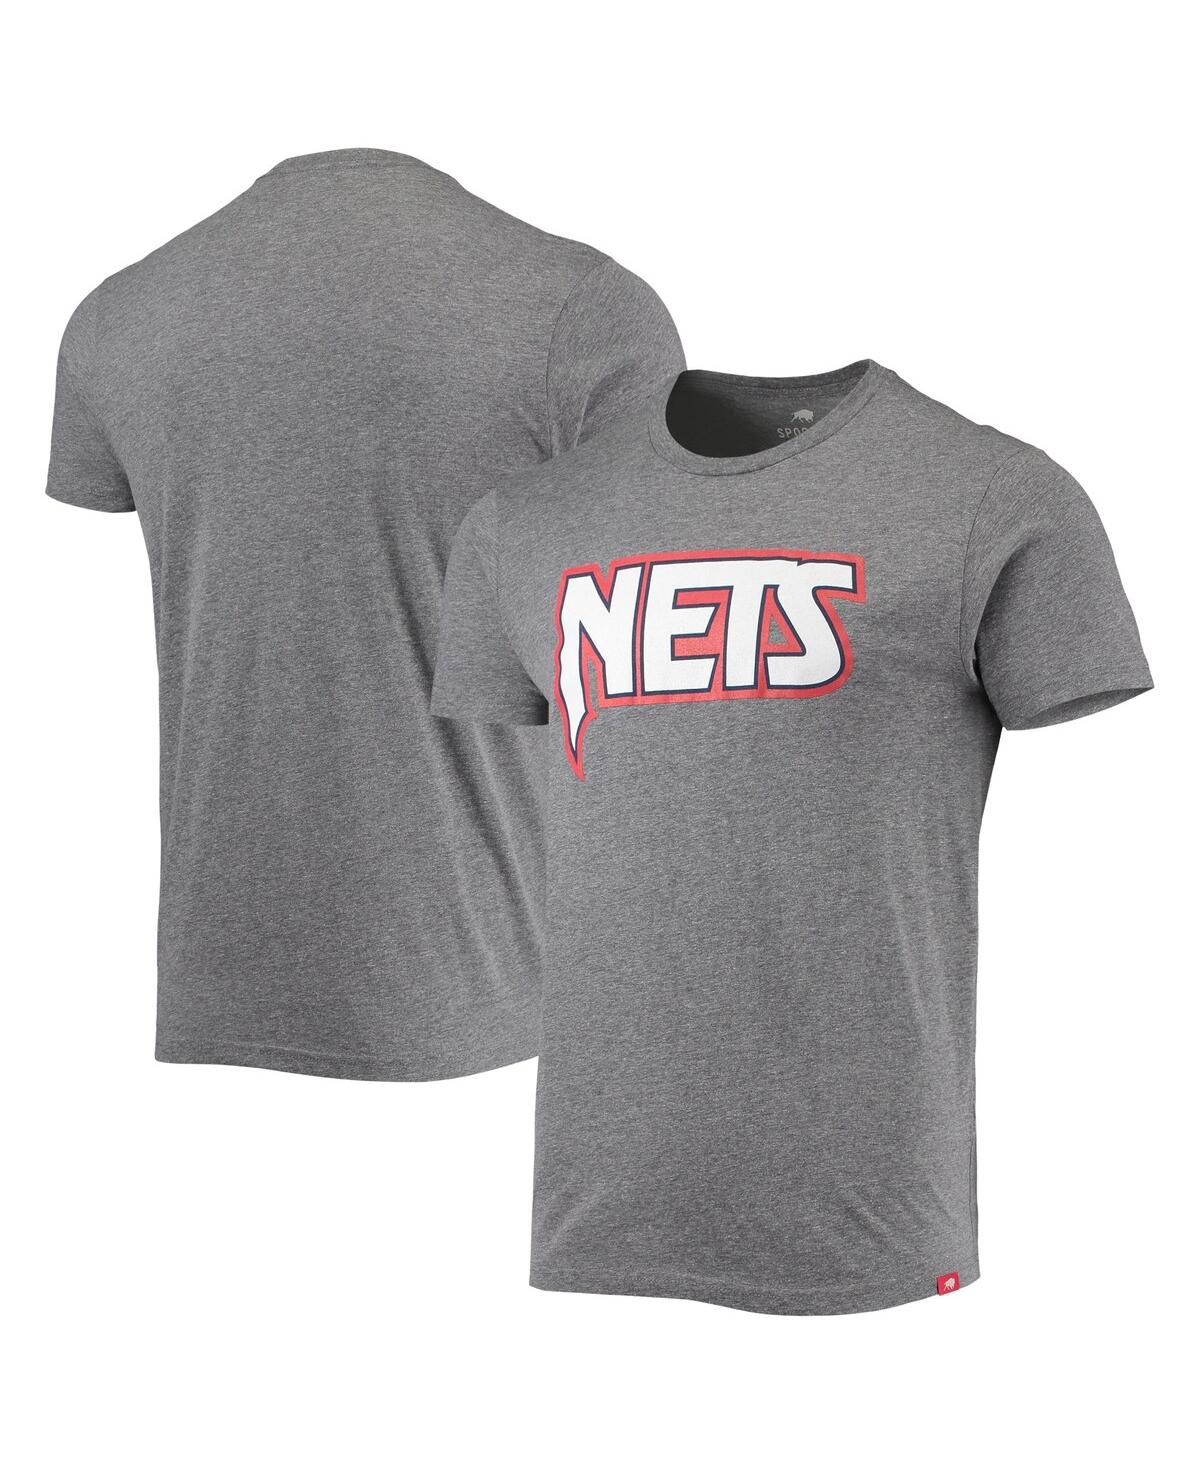 Men's Sportiqe Heather Gray Brooklyn Nets Moments Mixtape Comfy Tri-Blend T-shirt - Heathered Gray